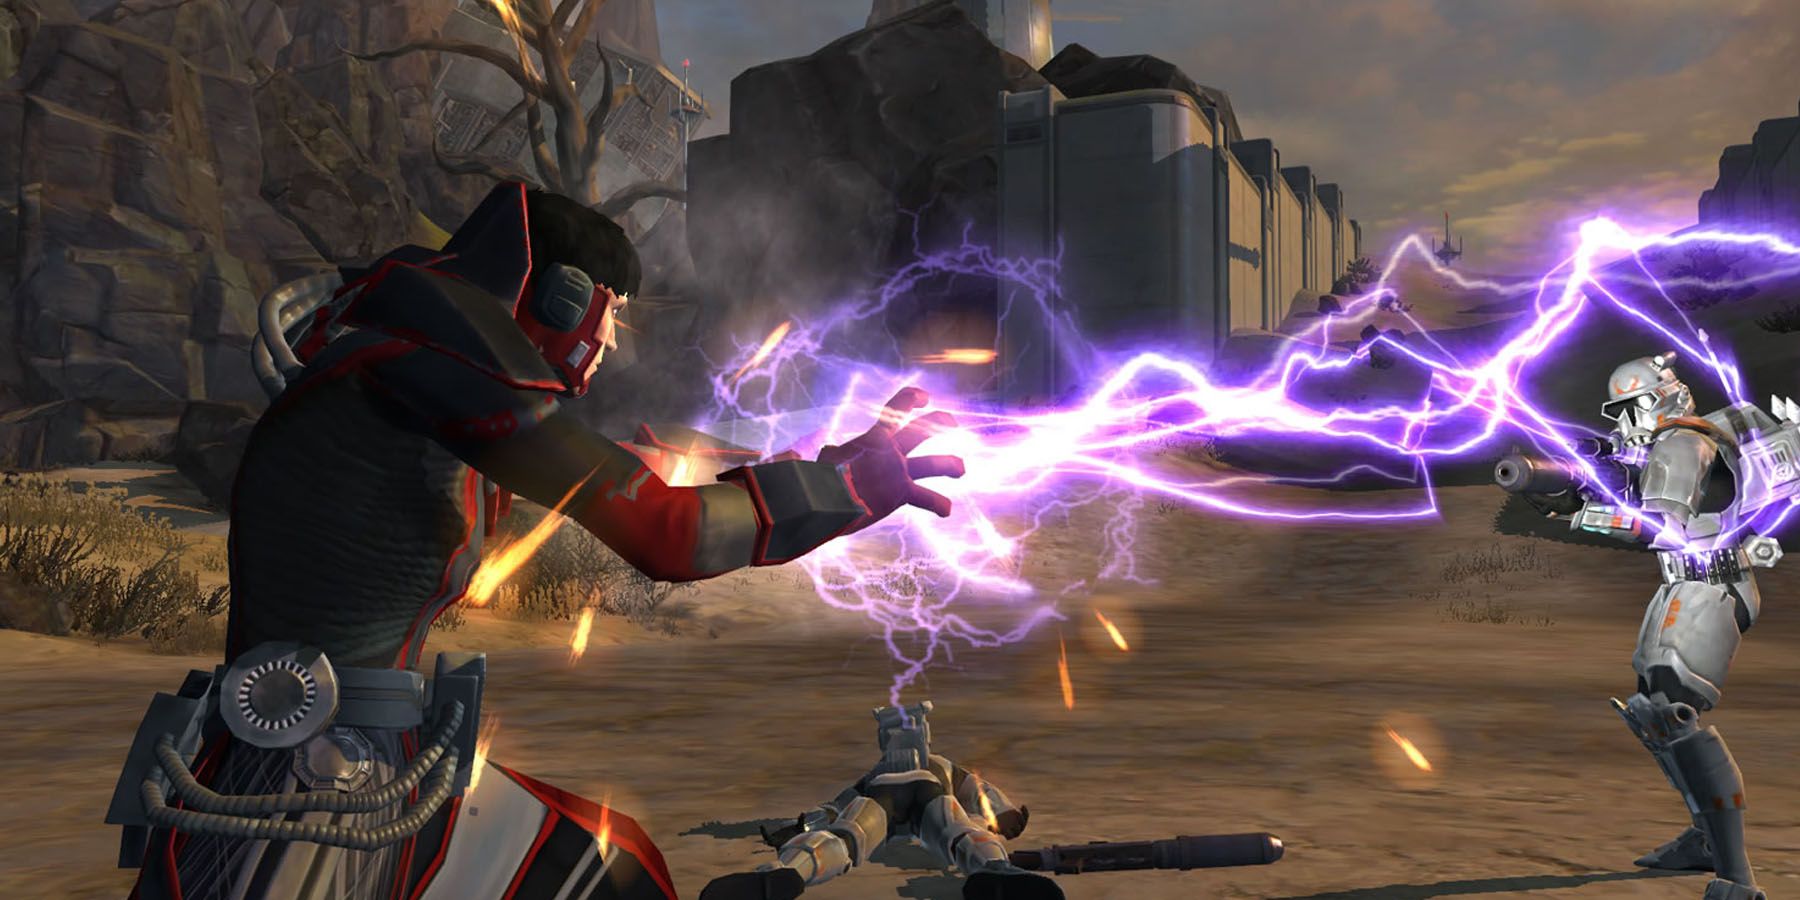 Sith Warrior unleashing Force Lightning